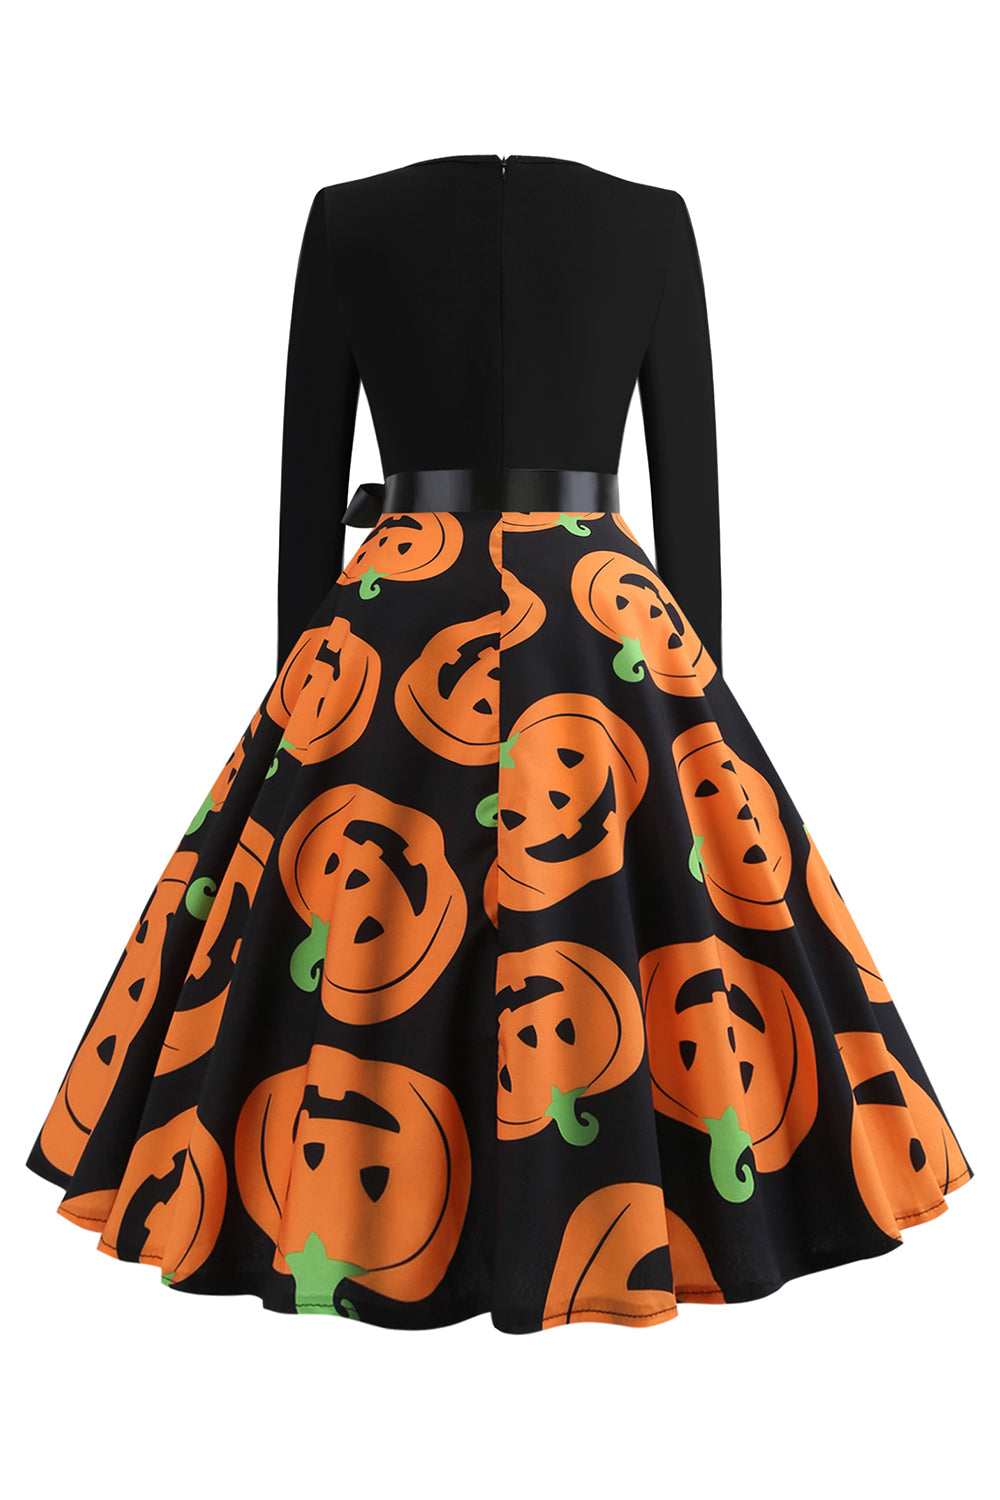 V-Neck Long Sleeve Print Pumpkin Lantern Vintage Dress